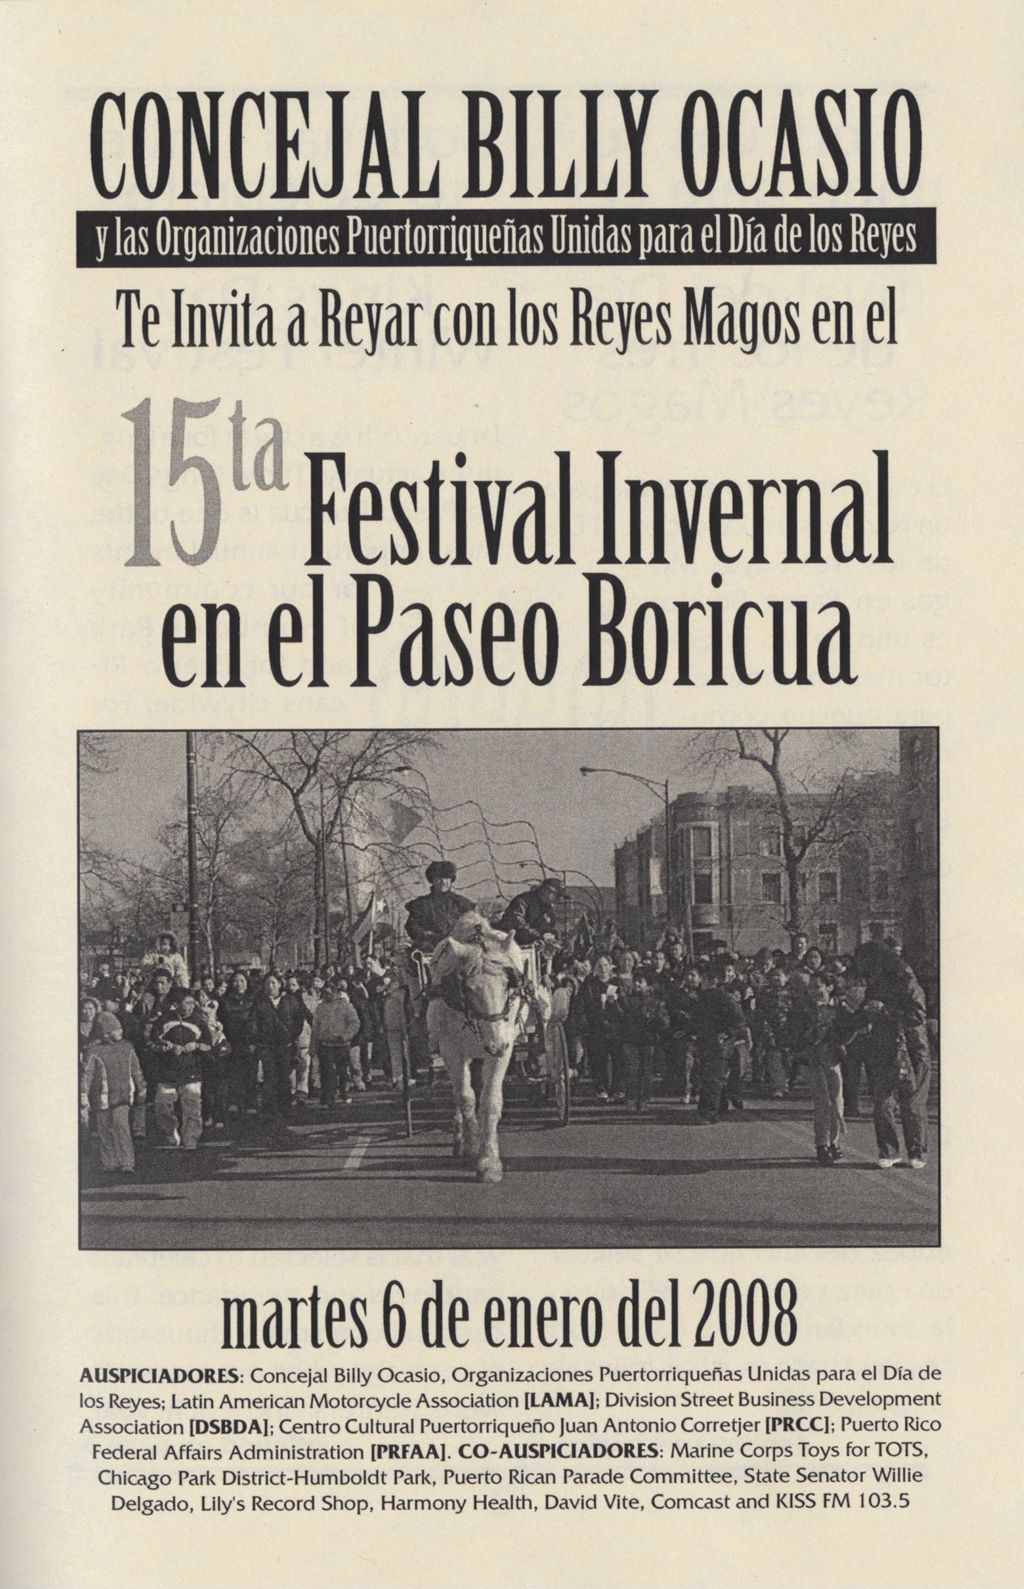 Miniature of 15th Festival Invernal en el Paseo Boricua